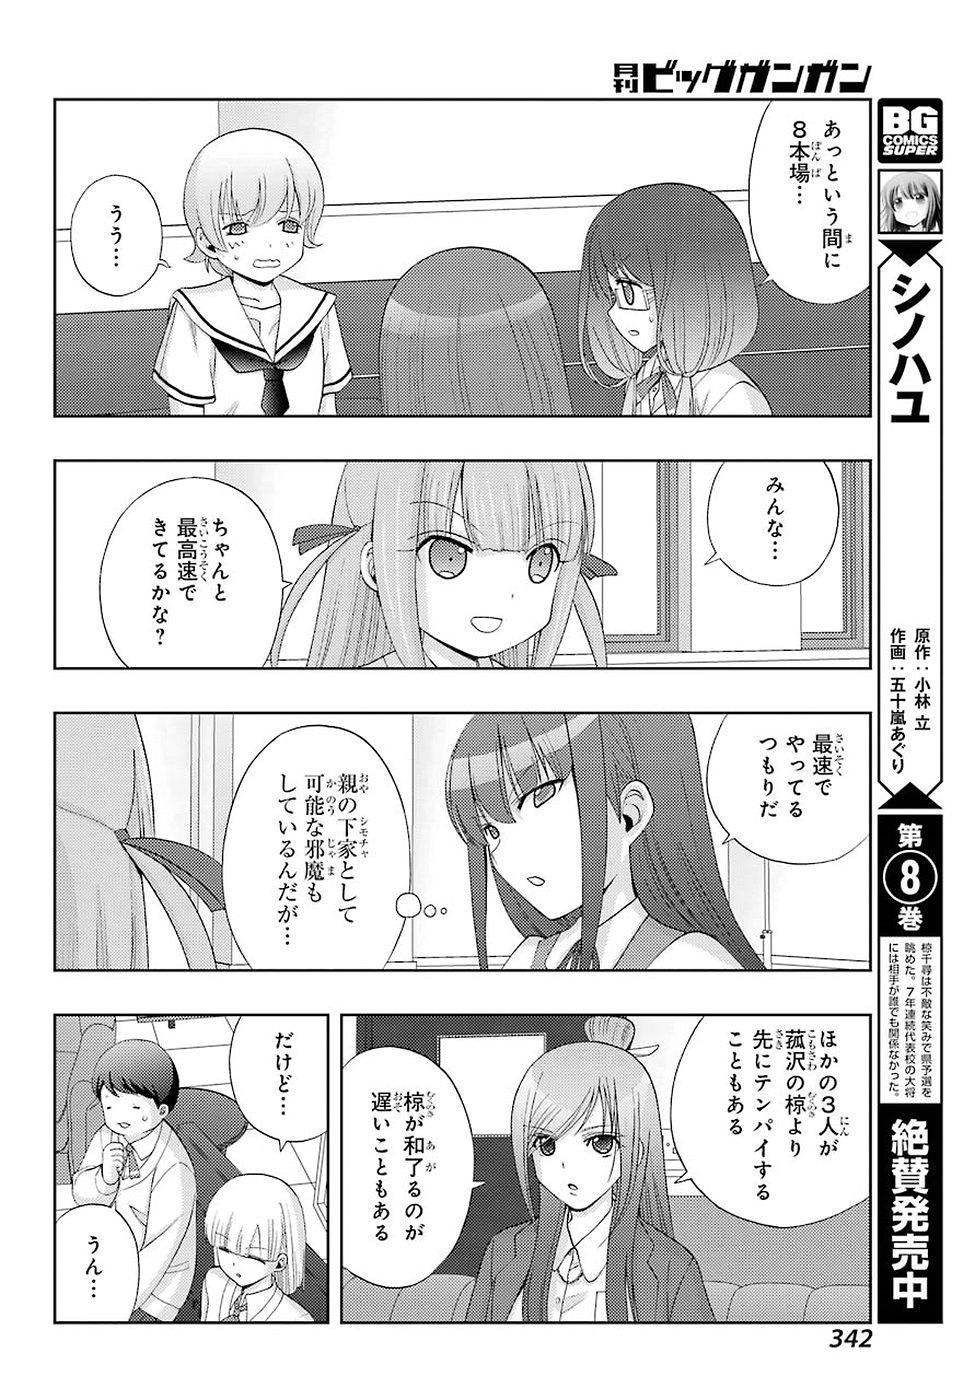 Shinohayu - The Dawn of Age Manga - Chapter 052 - Page 4